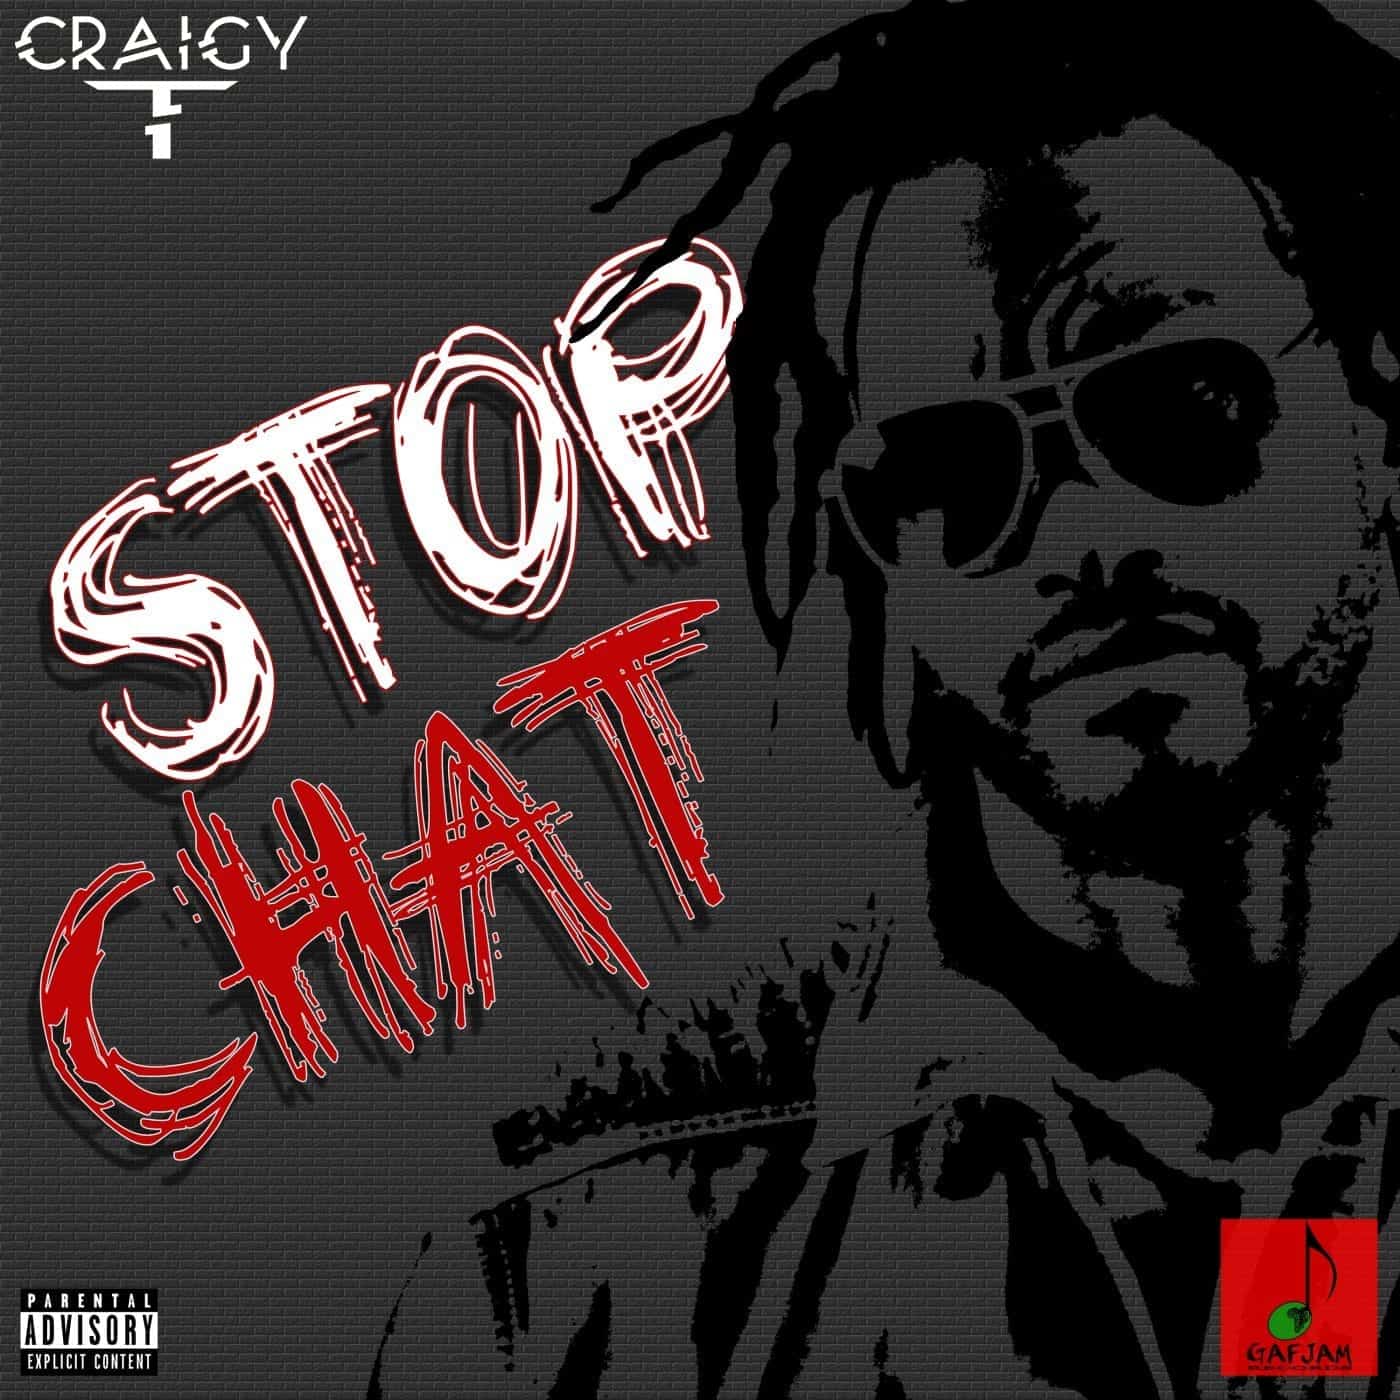 Craigy T - Stop Chat - Gaf Jam / VPAL Music